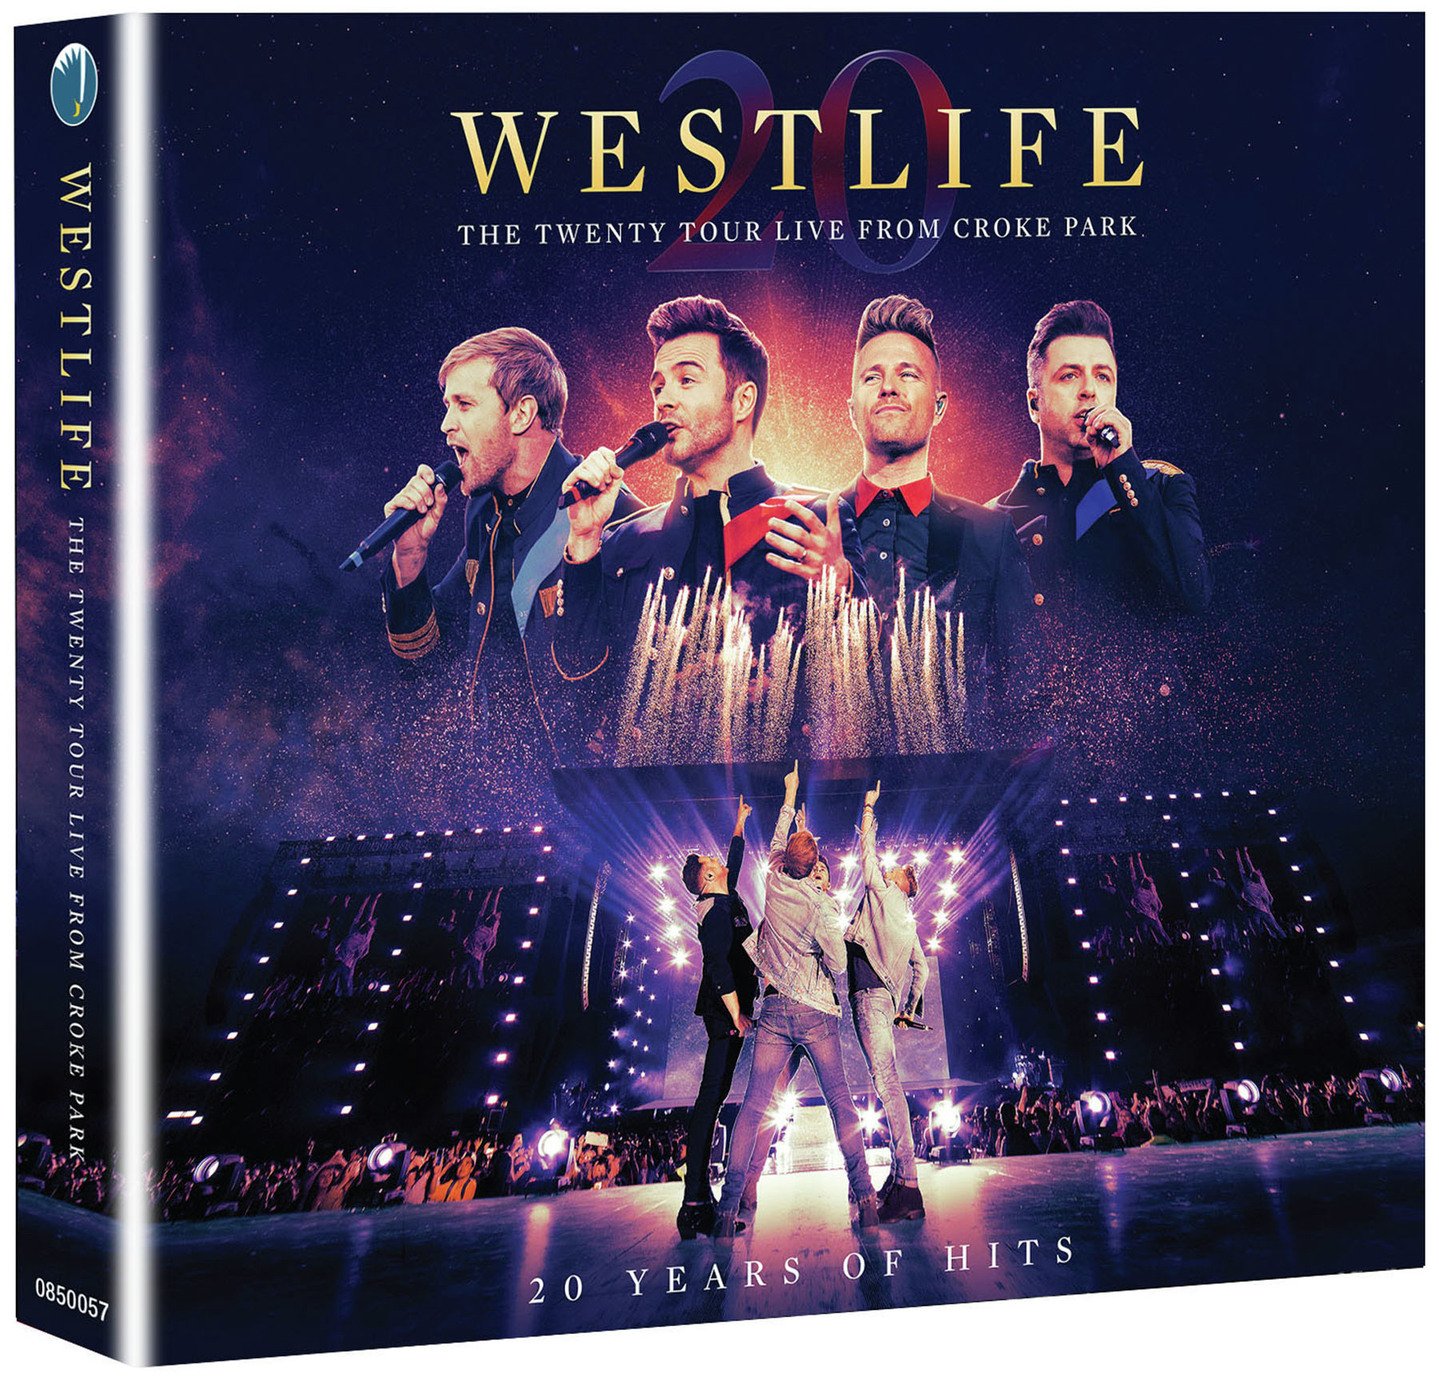 Westlife: Twenty Tour  Live from Croke Park CD & DVD Review